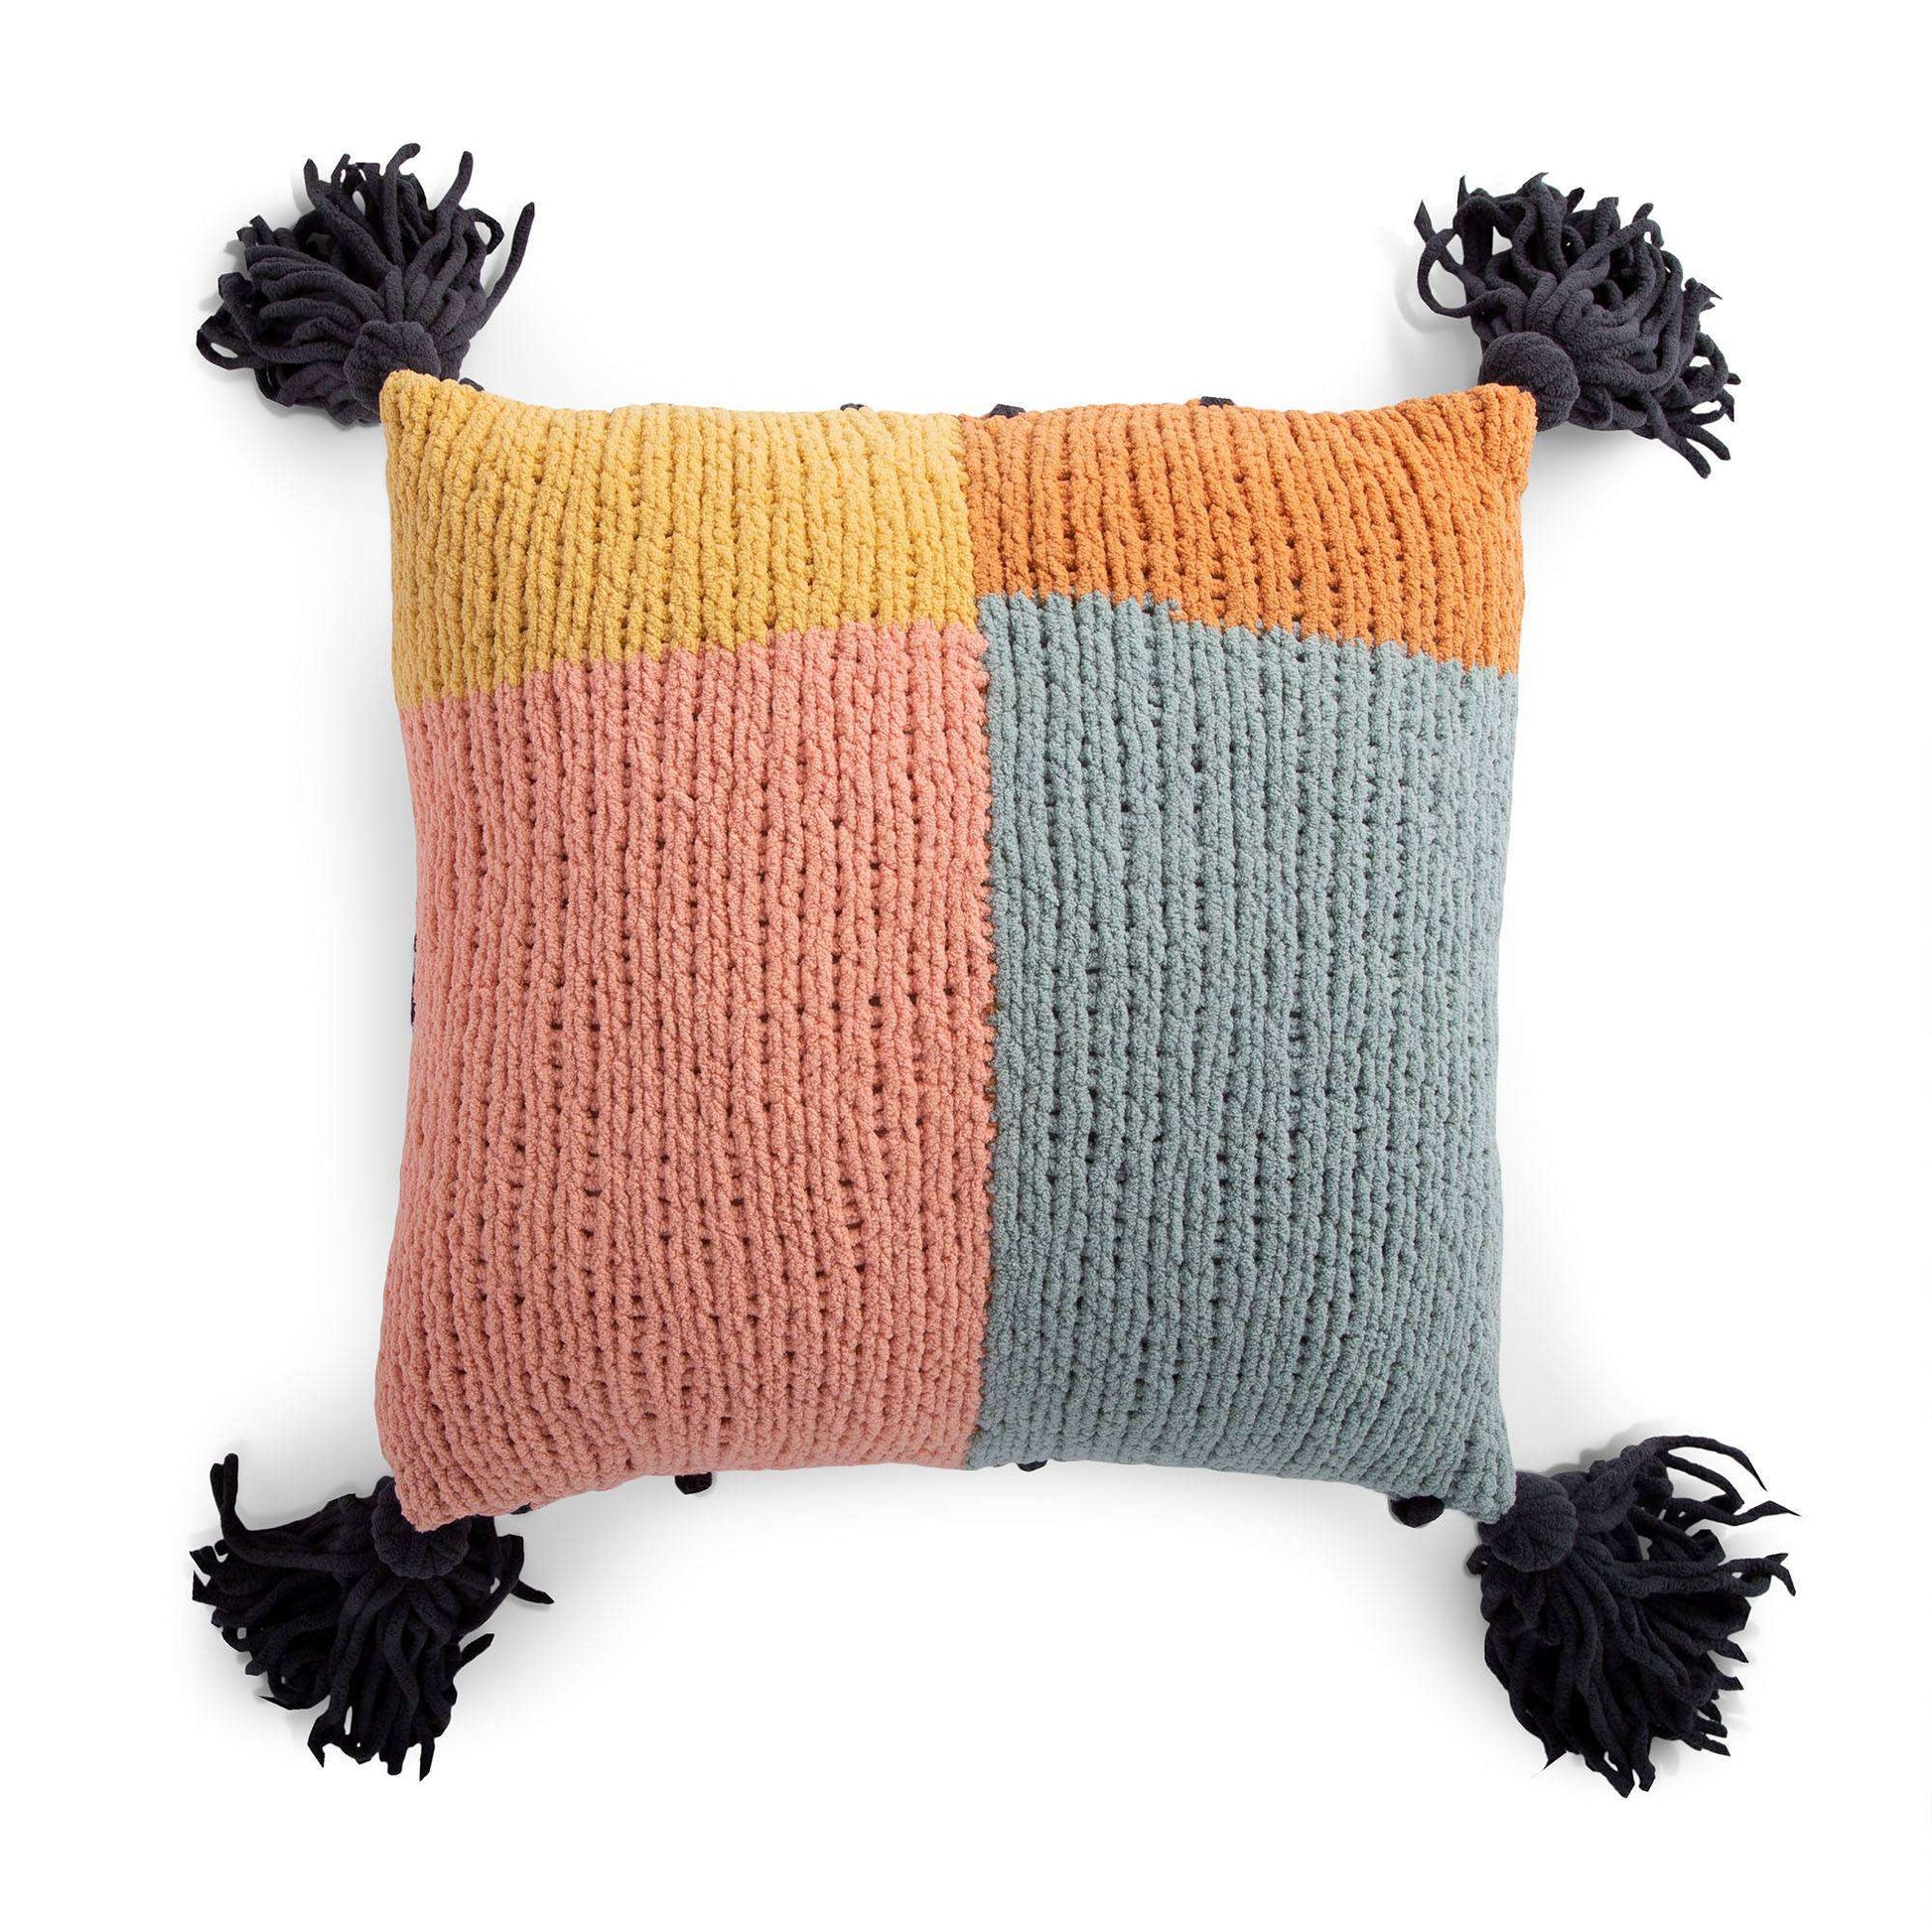 Bernat Blanket Yarn – LuLu's Yarn Art